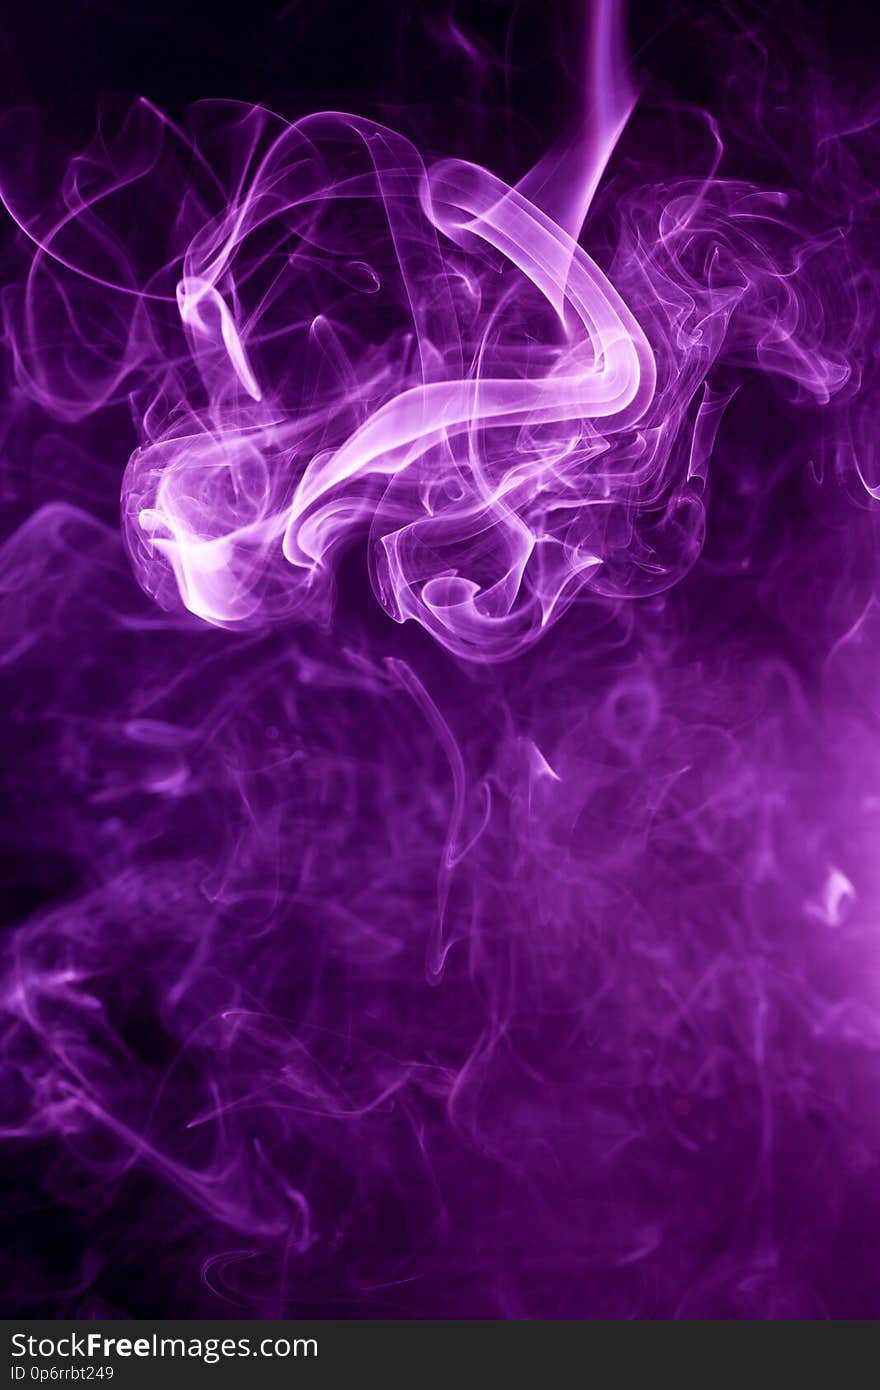 Toxic purple smoke background texture.